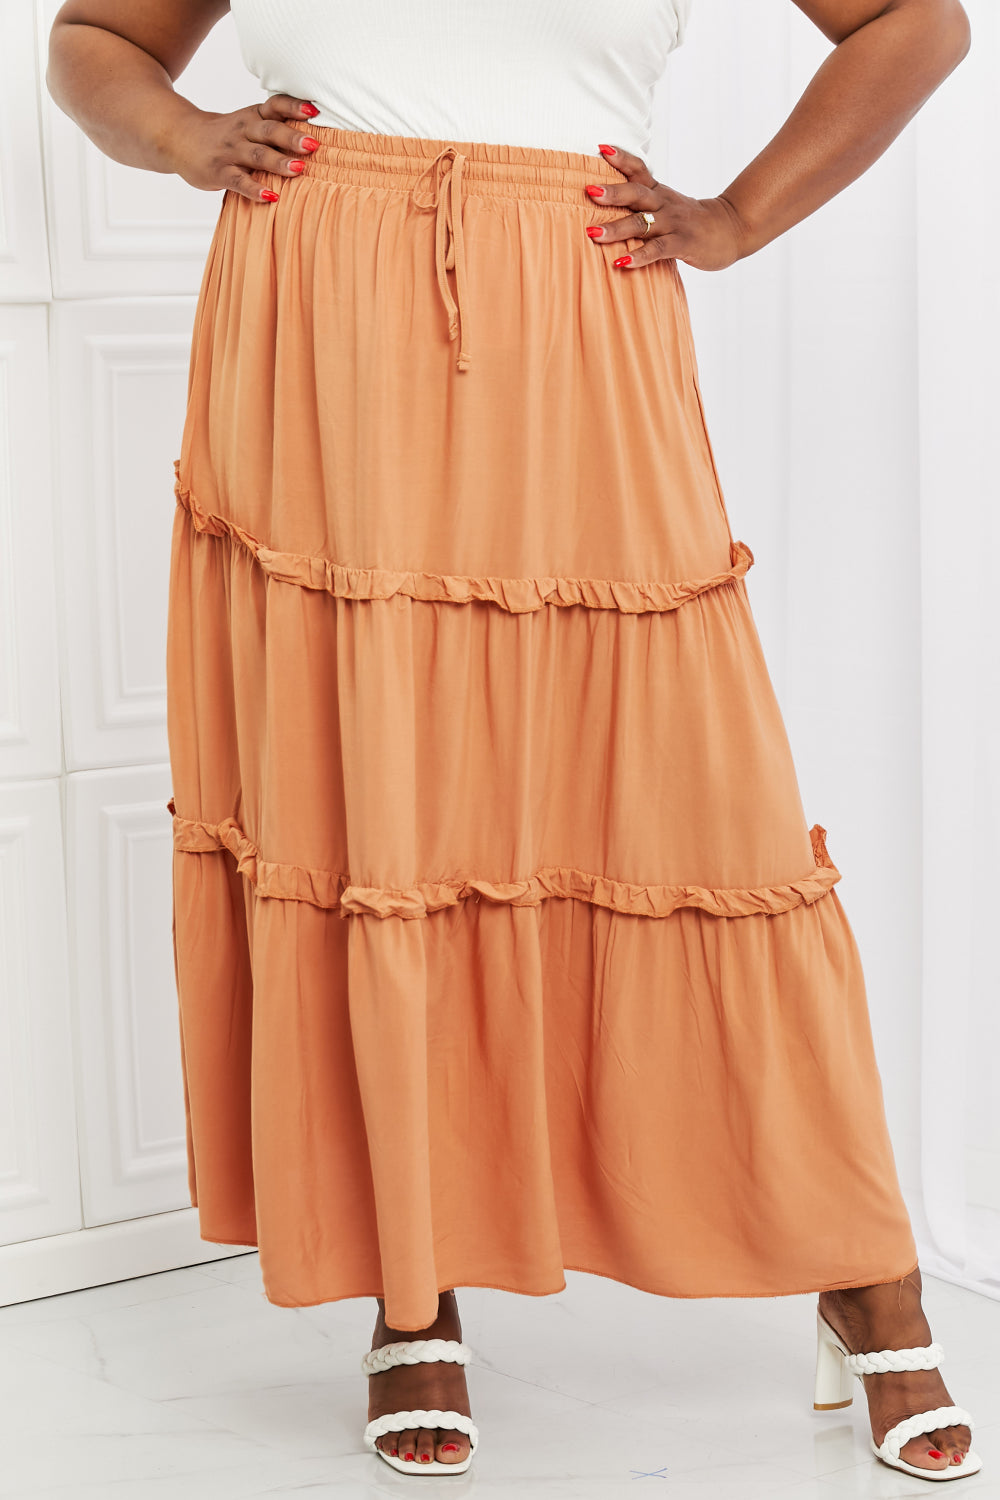 modest LDS missionary skirt Boho orange ruffled maxi skirt